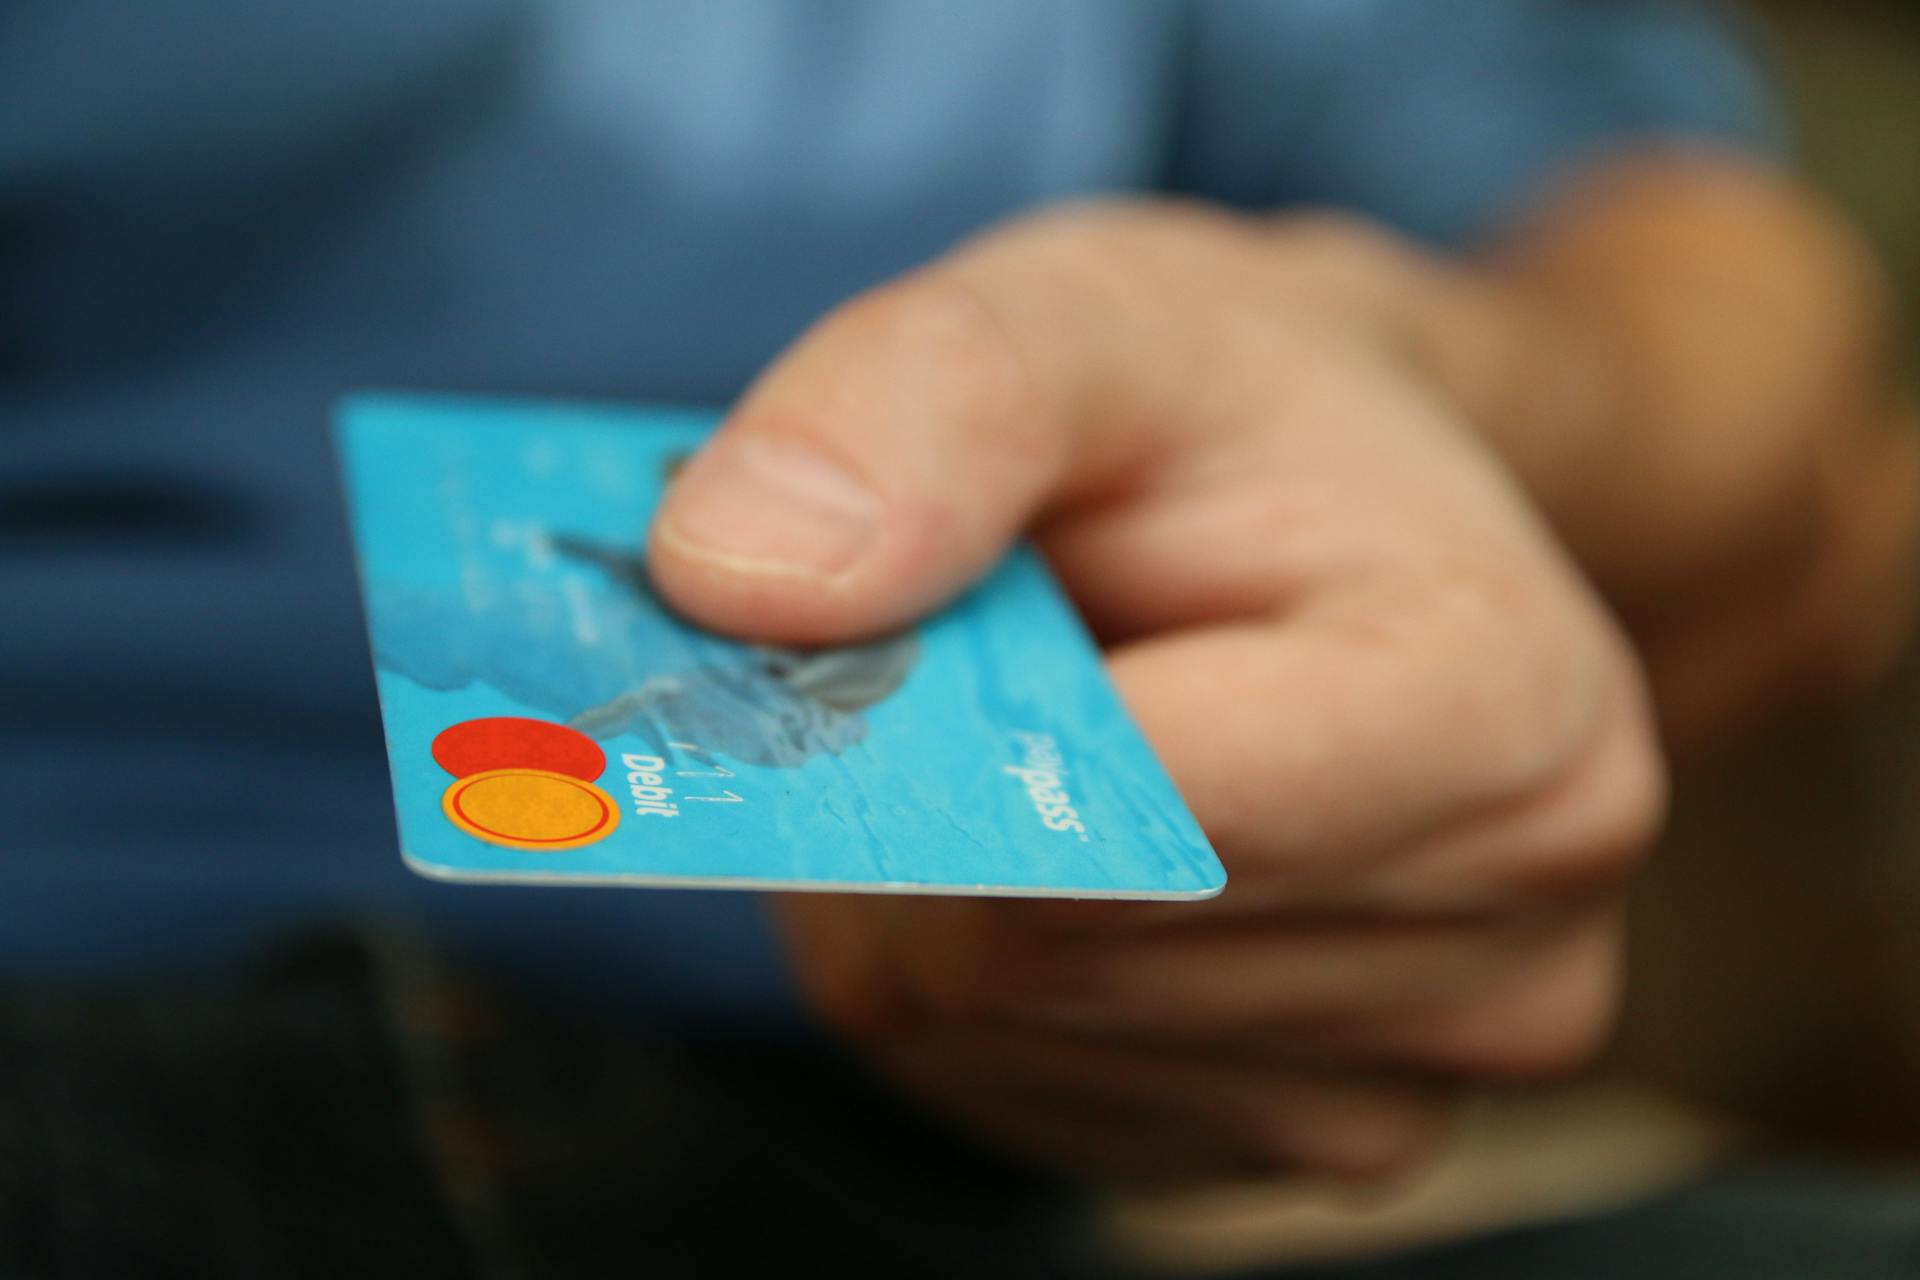 A person holding a debit card | Source: Pexels